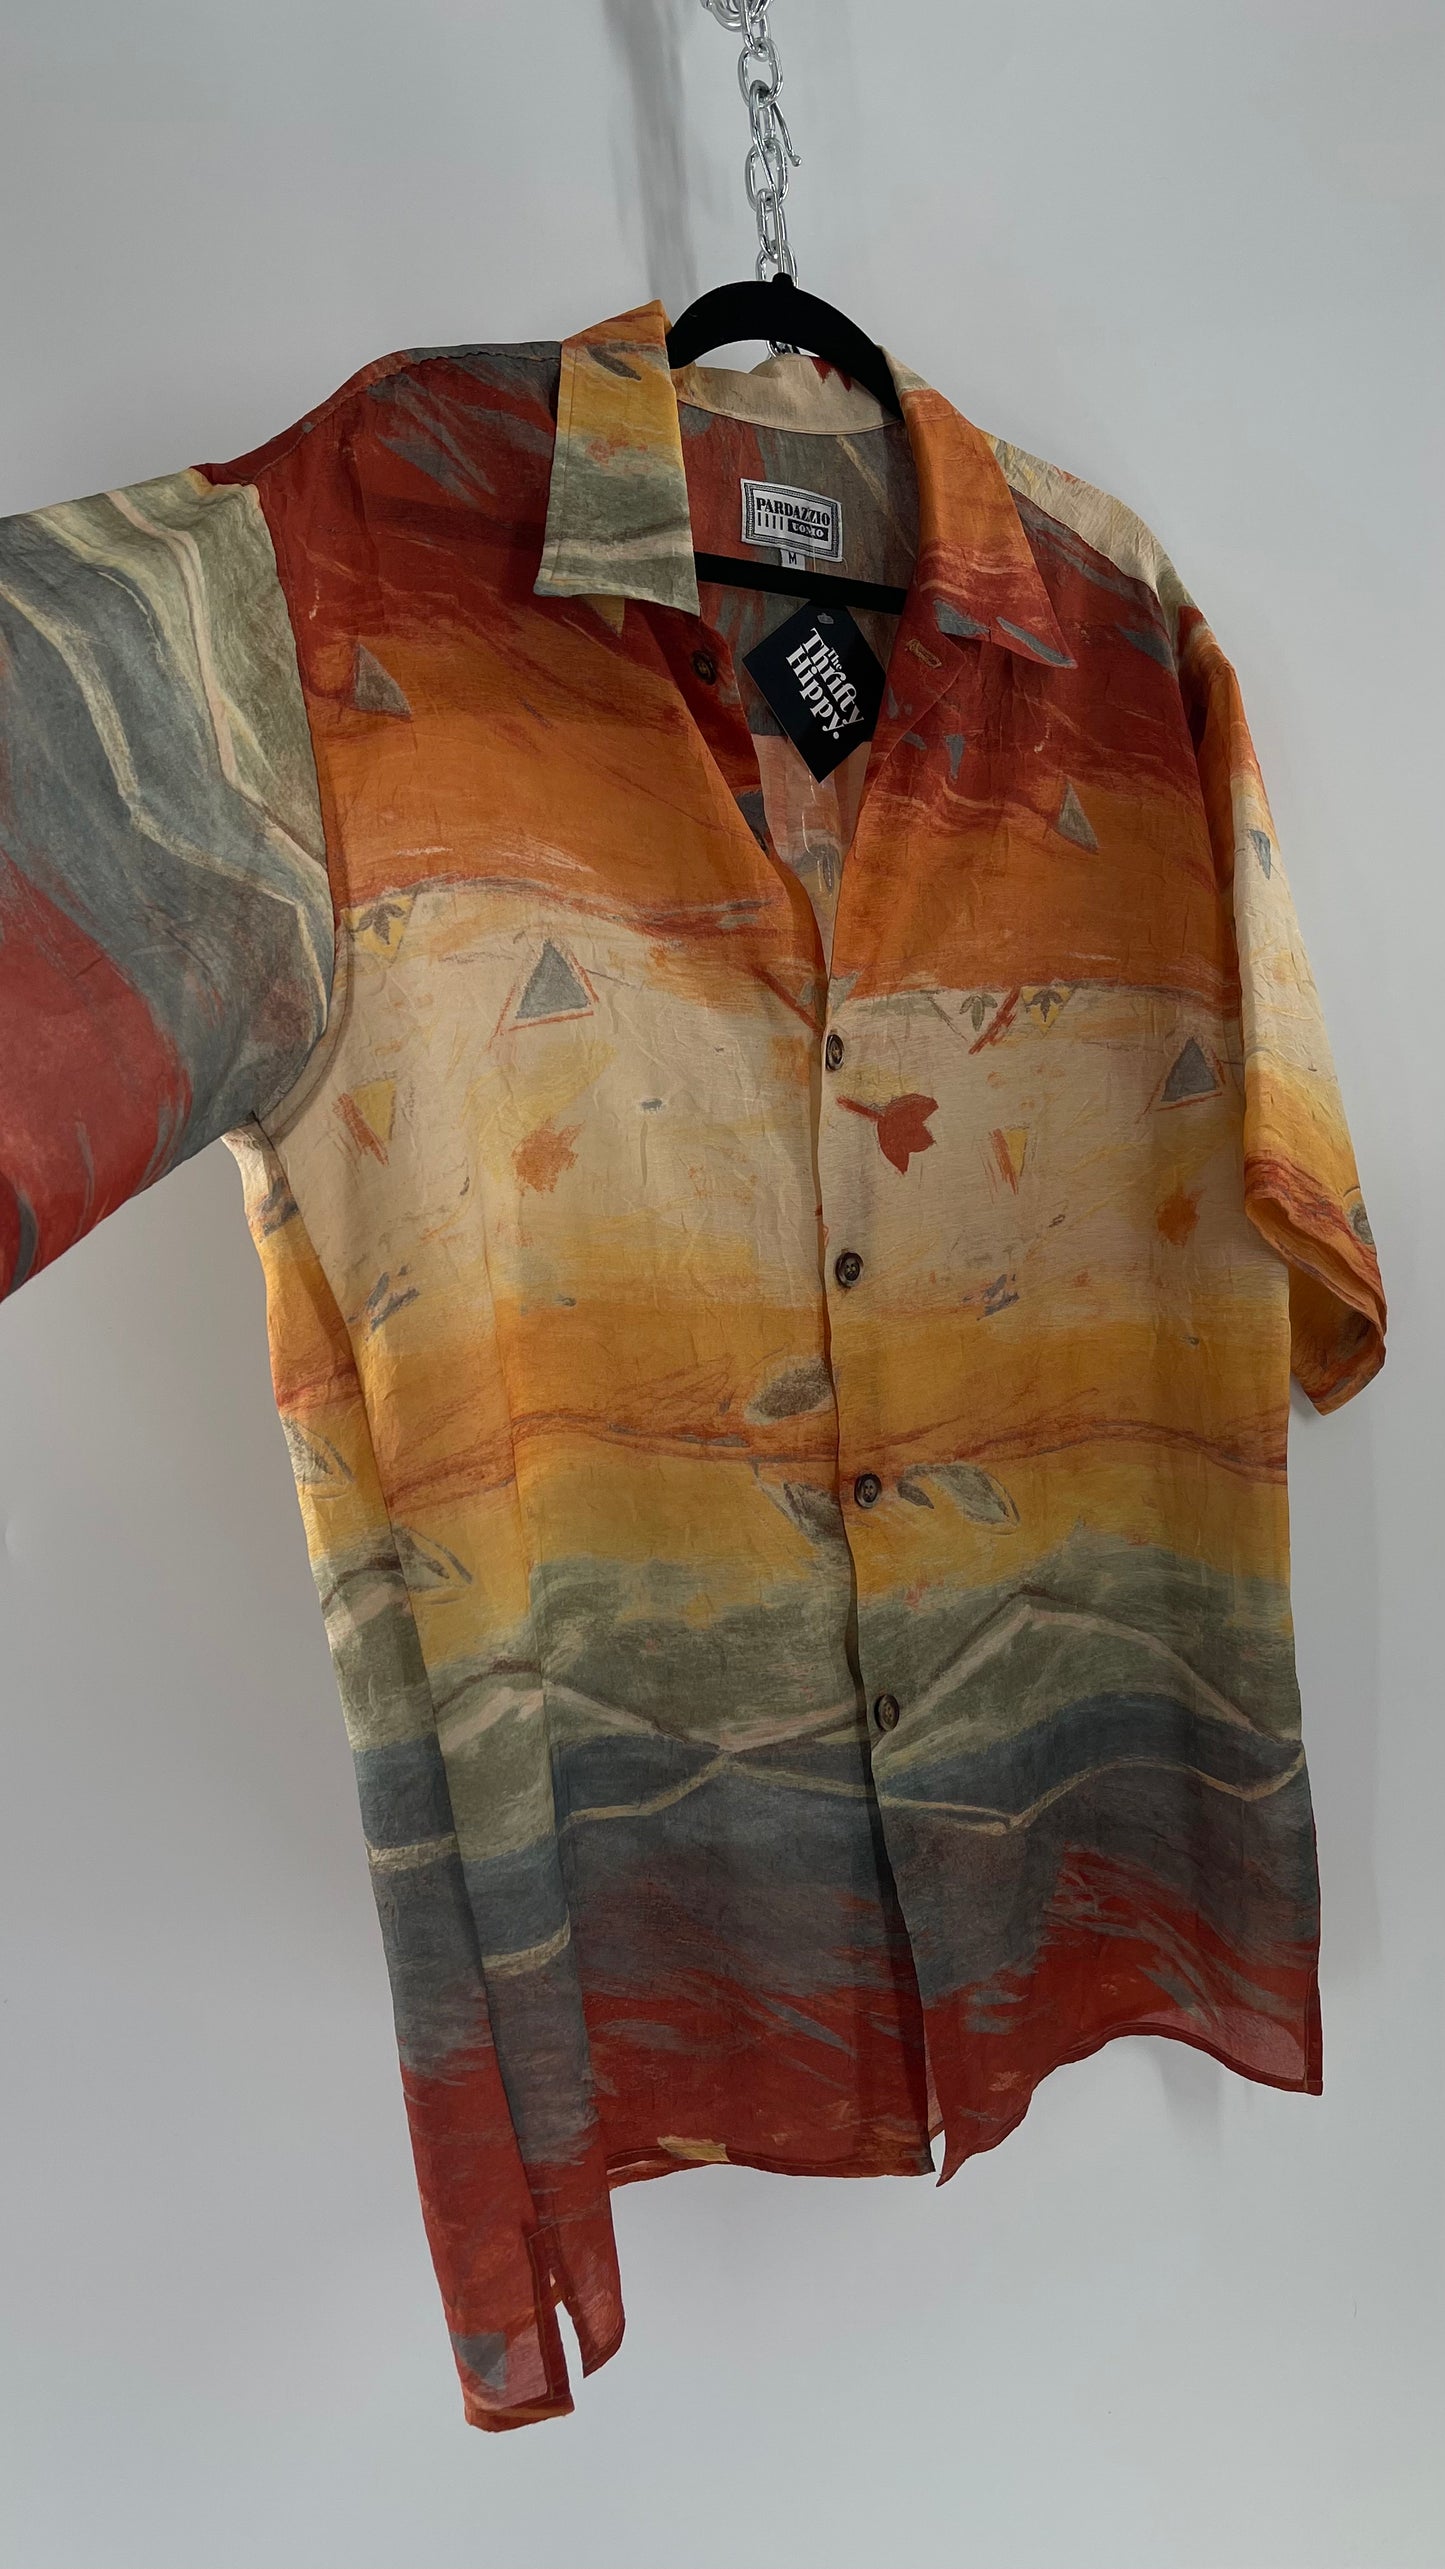 Vintage Pardazzio Uomo Sheer Crimped Abstract Fall Short Sleeve Button Up (Medium)